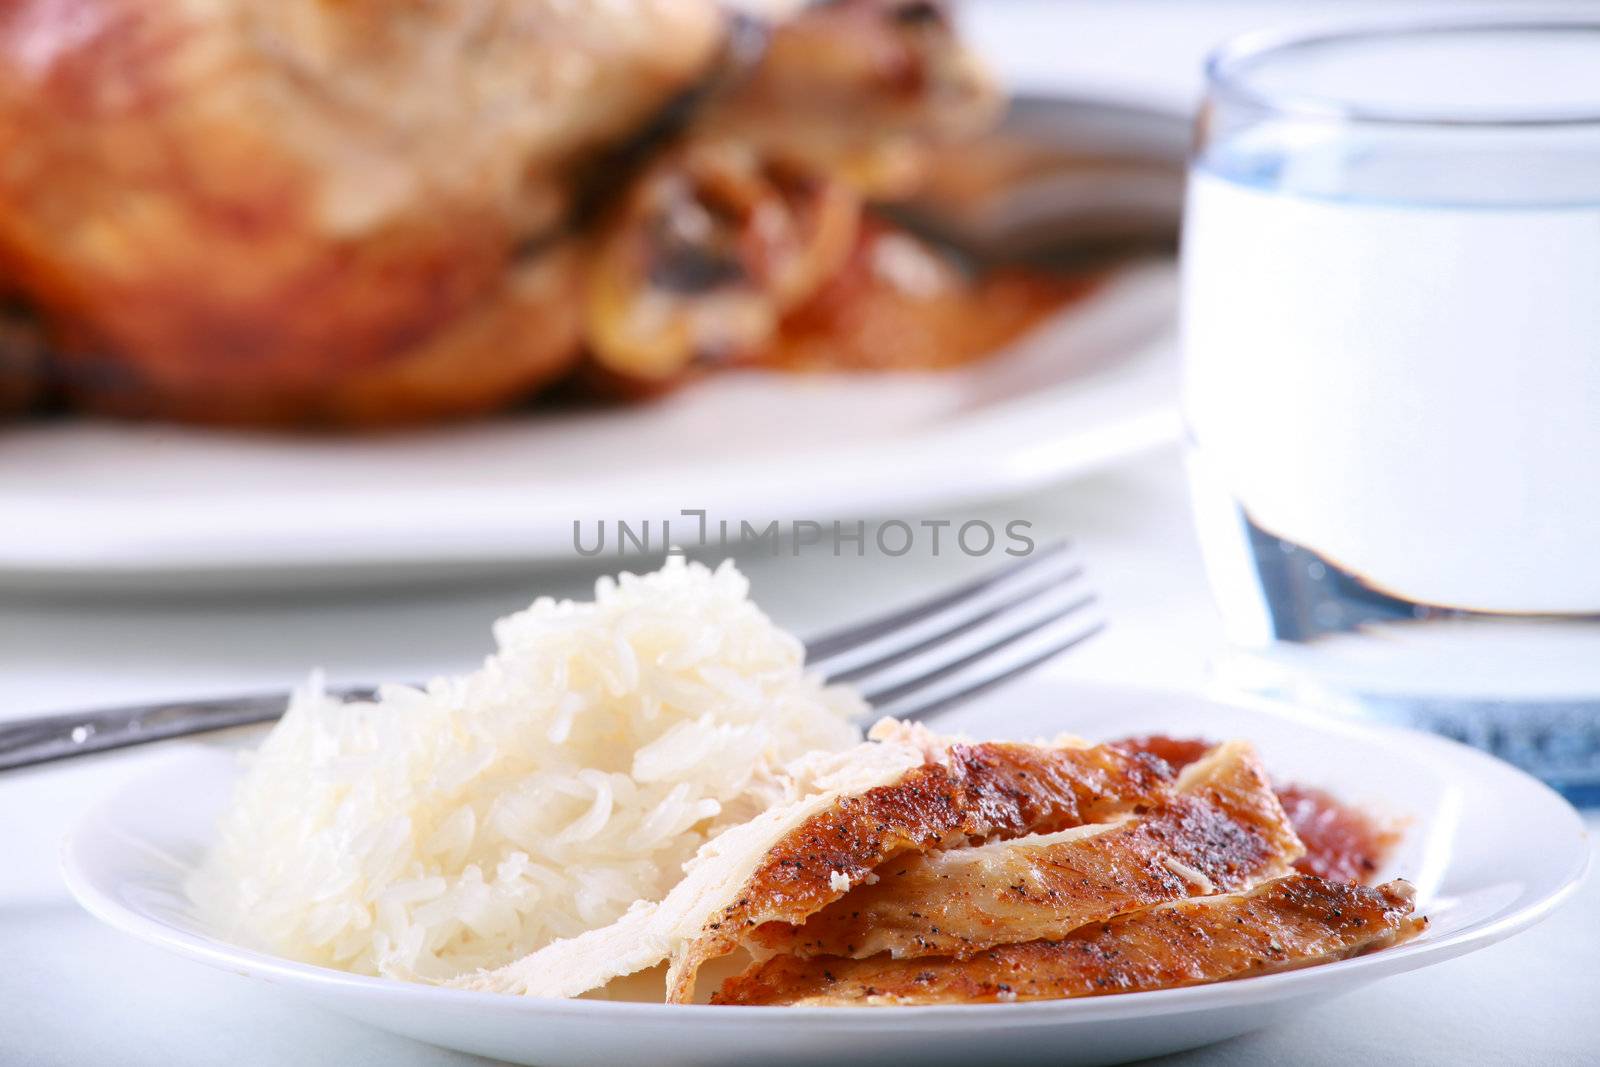 Chicken and rice meal by jarenwicklund